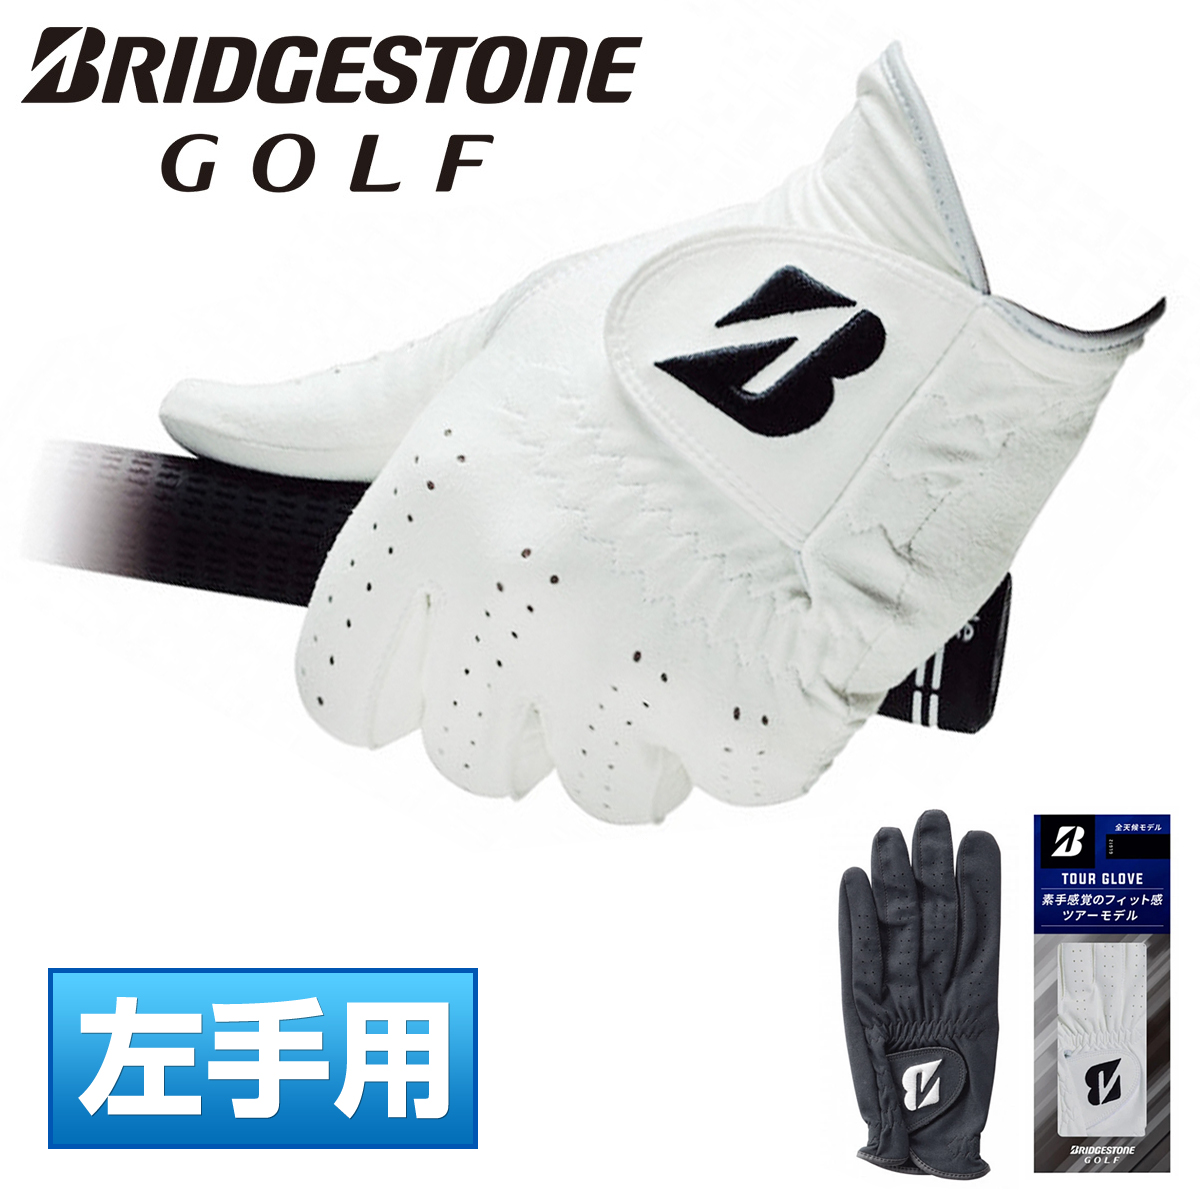 BRIDGESTONE GOLF ブリヂストンゴルフ日本正規品 TOUR GLOVE メンズゴルフグローブ(左手用) 「 GLG12 」 